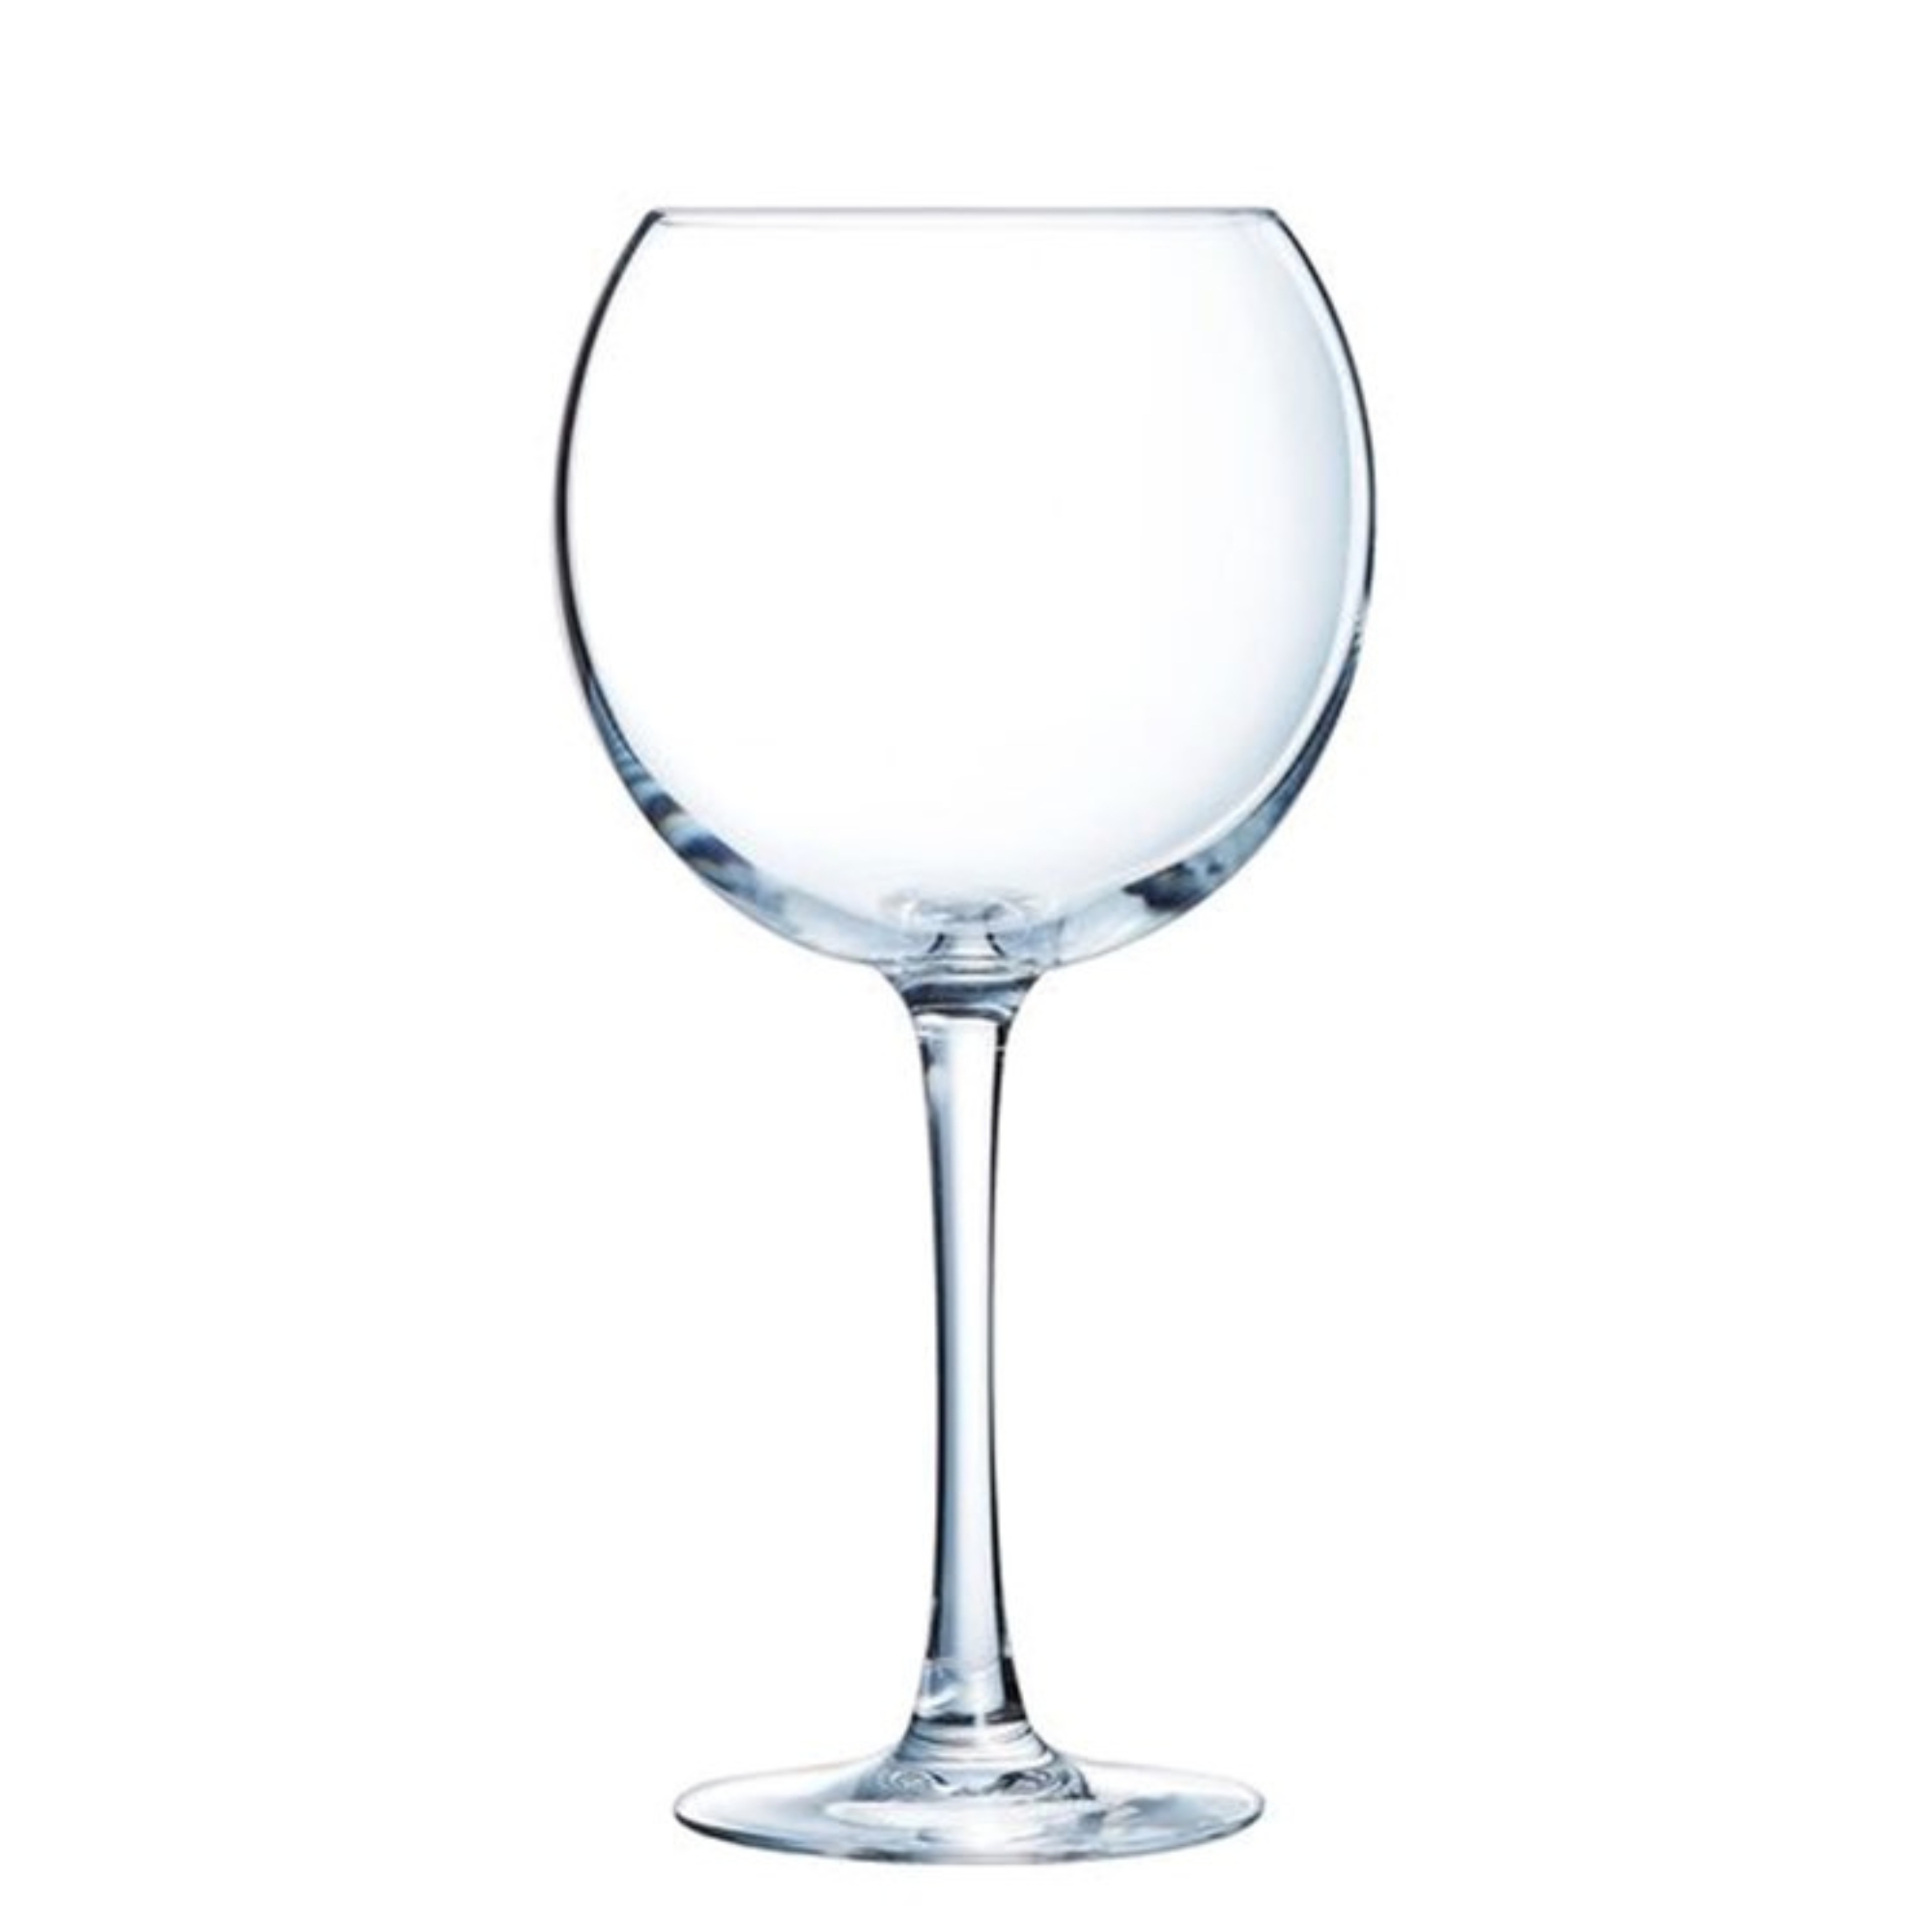 Savoie Wine Glasses 8.5oz / 240ml - drinkstuff